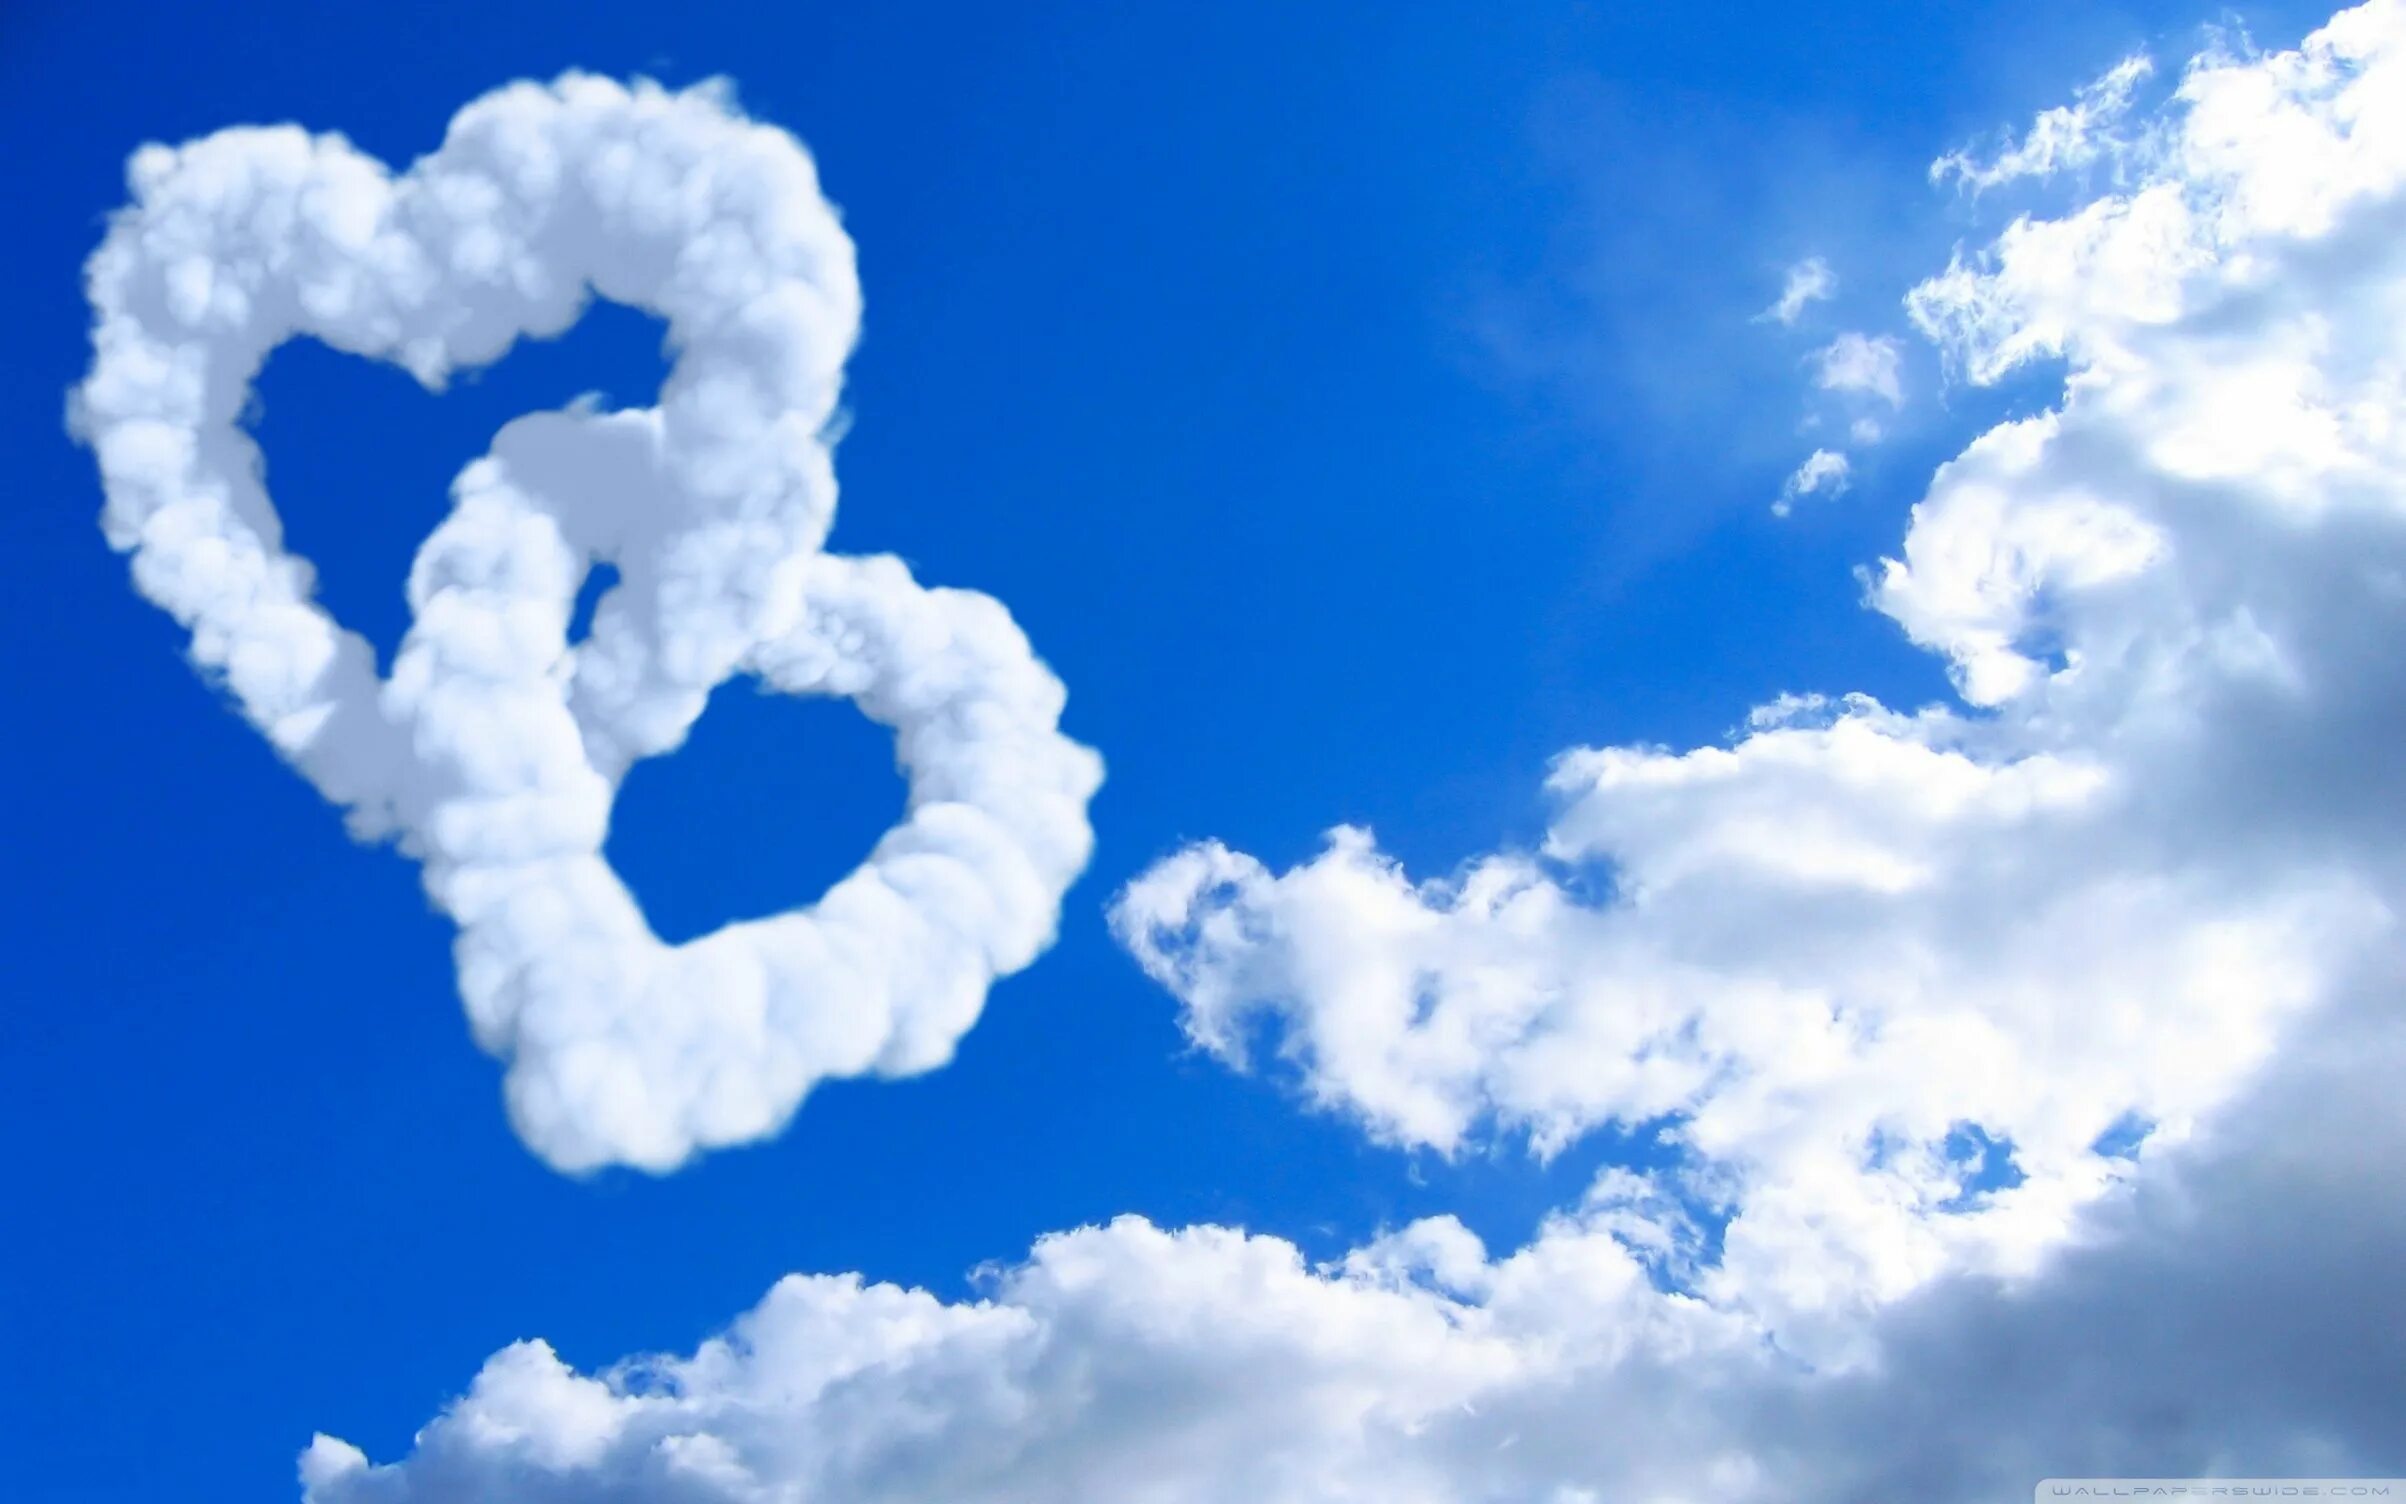 Твое невероятное сердце. Облака. Сердечко в небе. Сердечко из облаков. Облако в виде сердечка.